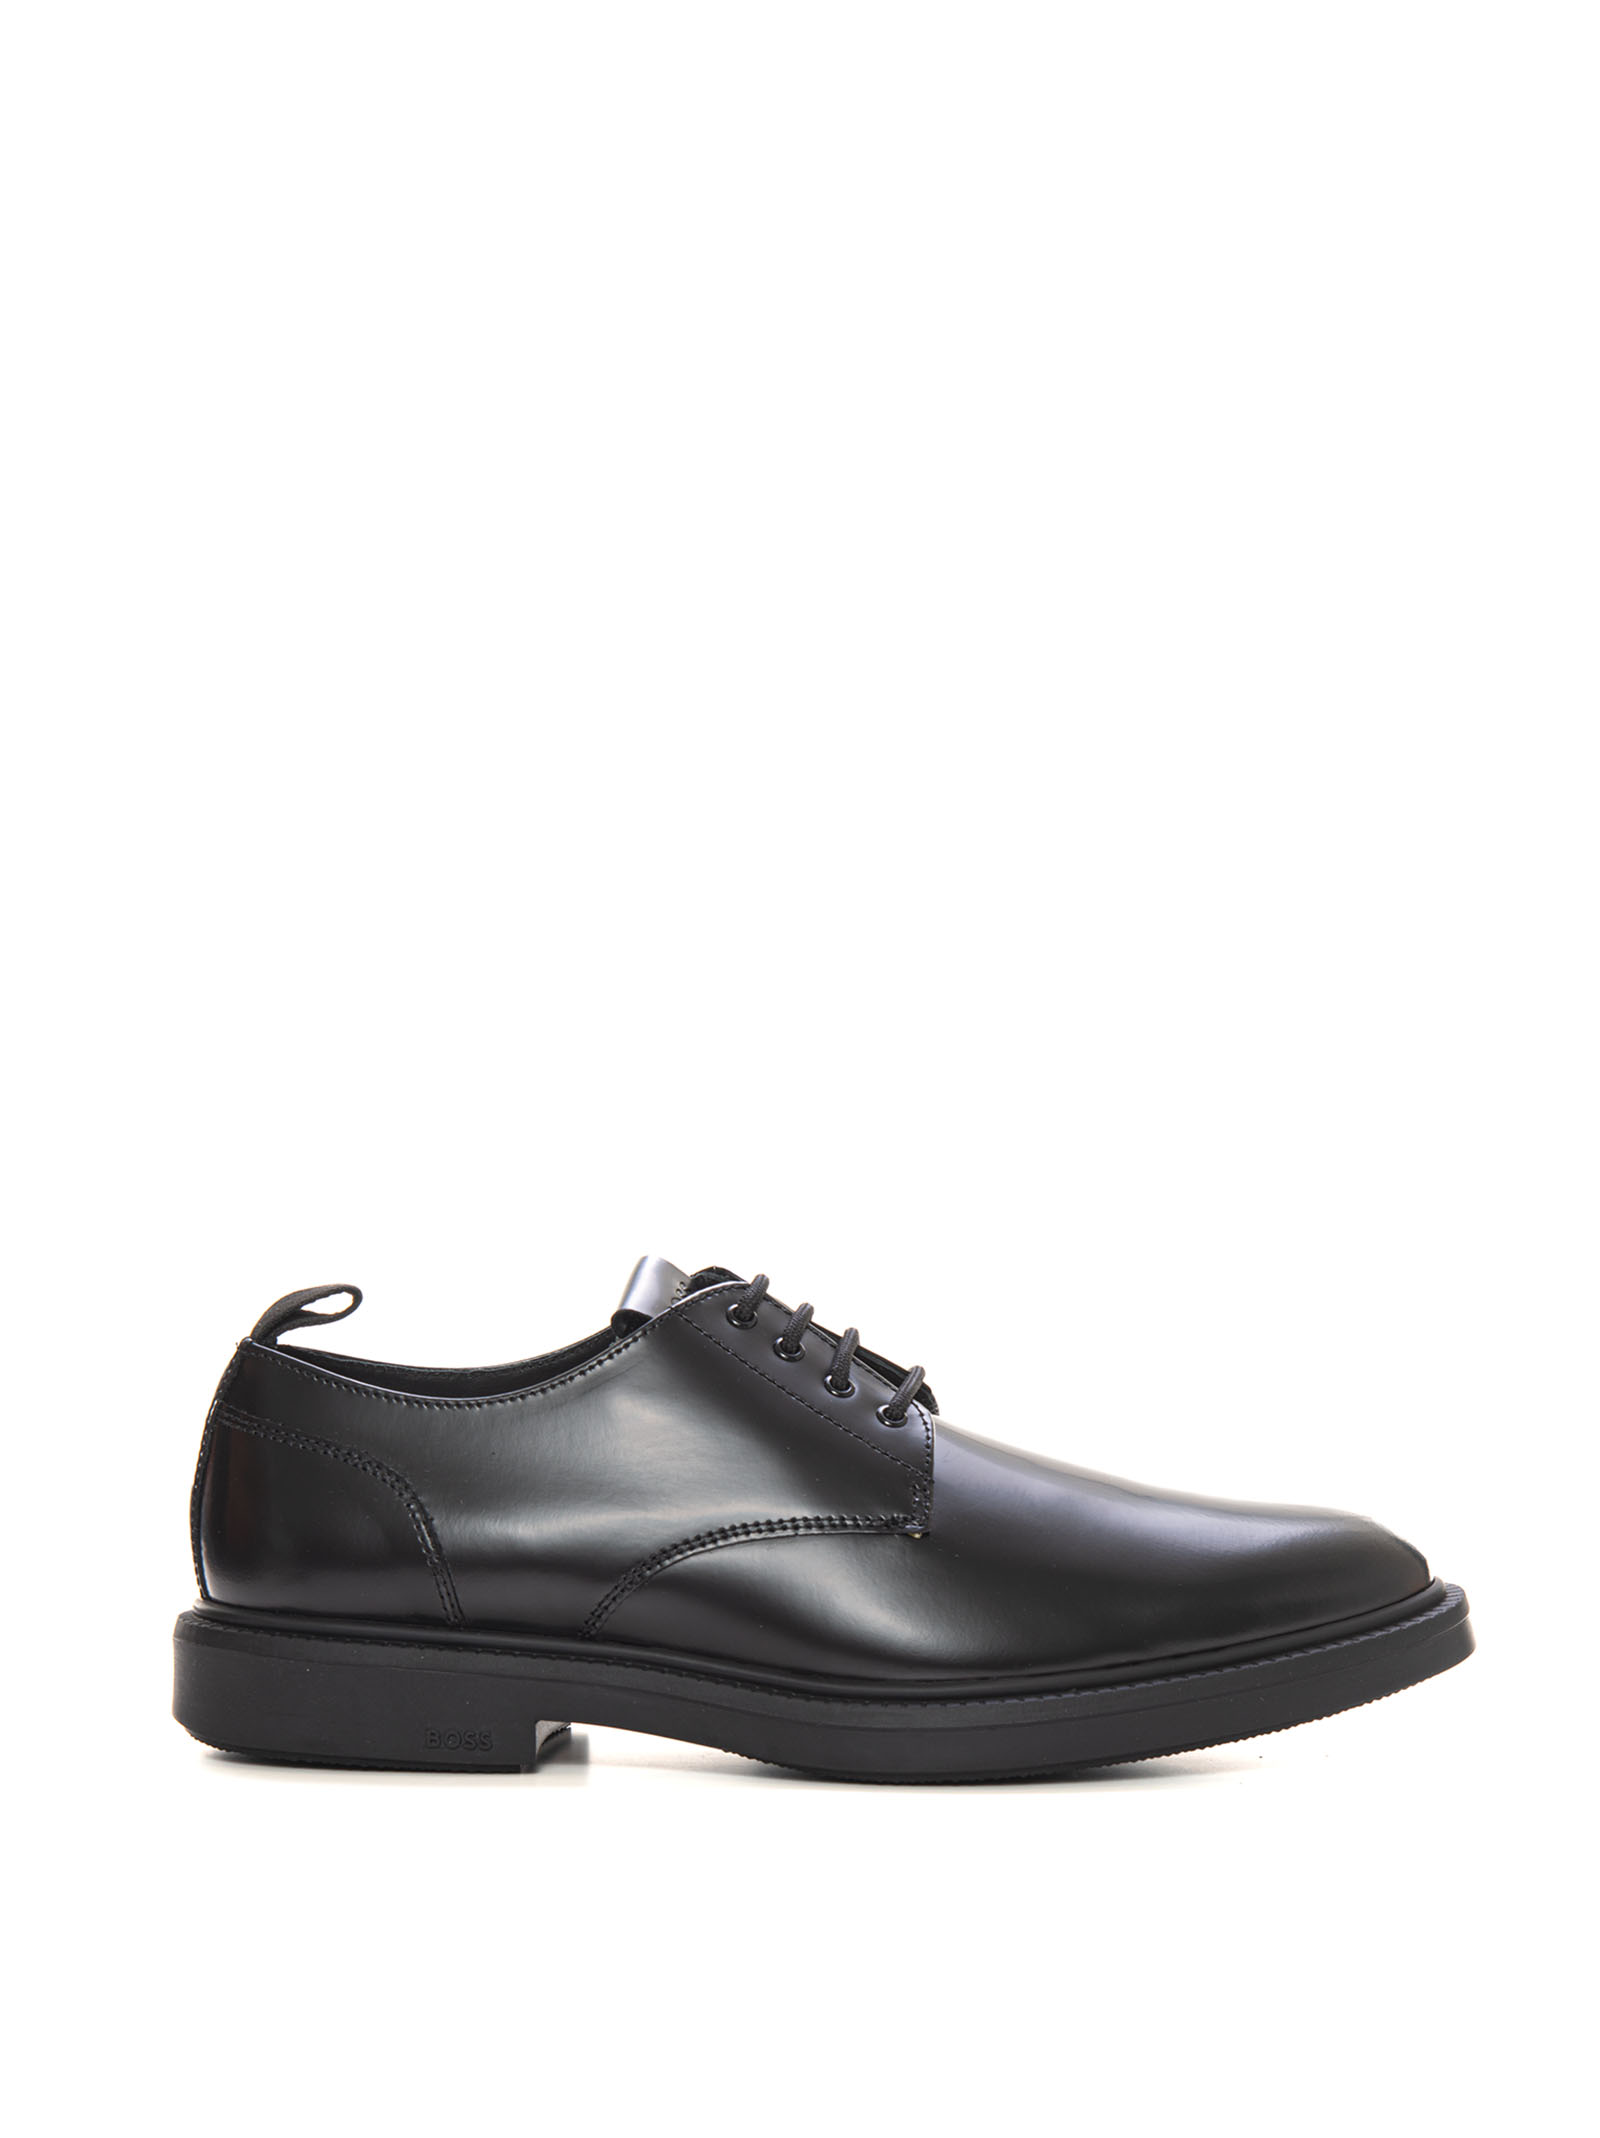 Hugo Boss Larry-derb-eybu Leather Shoes In Black